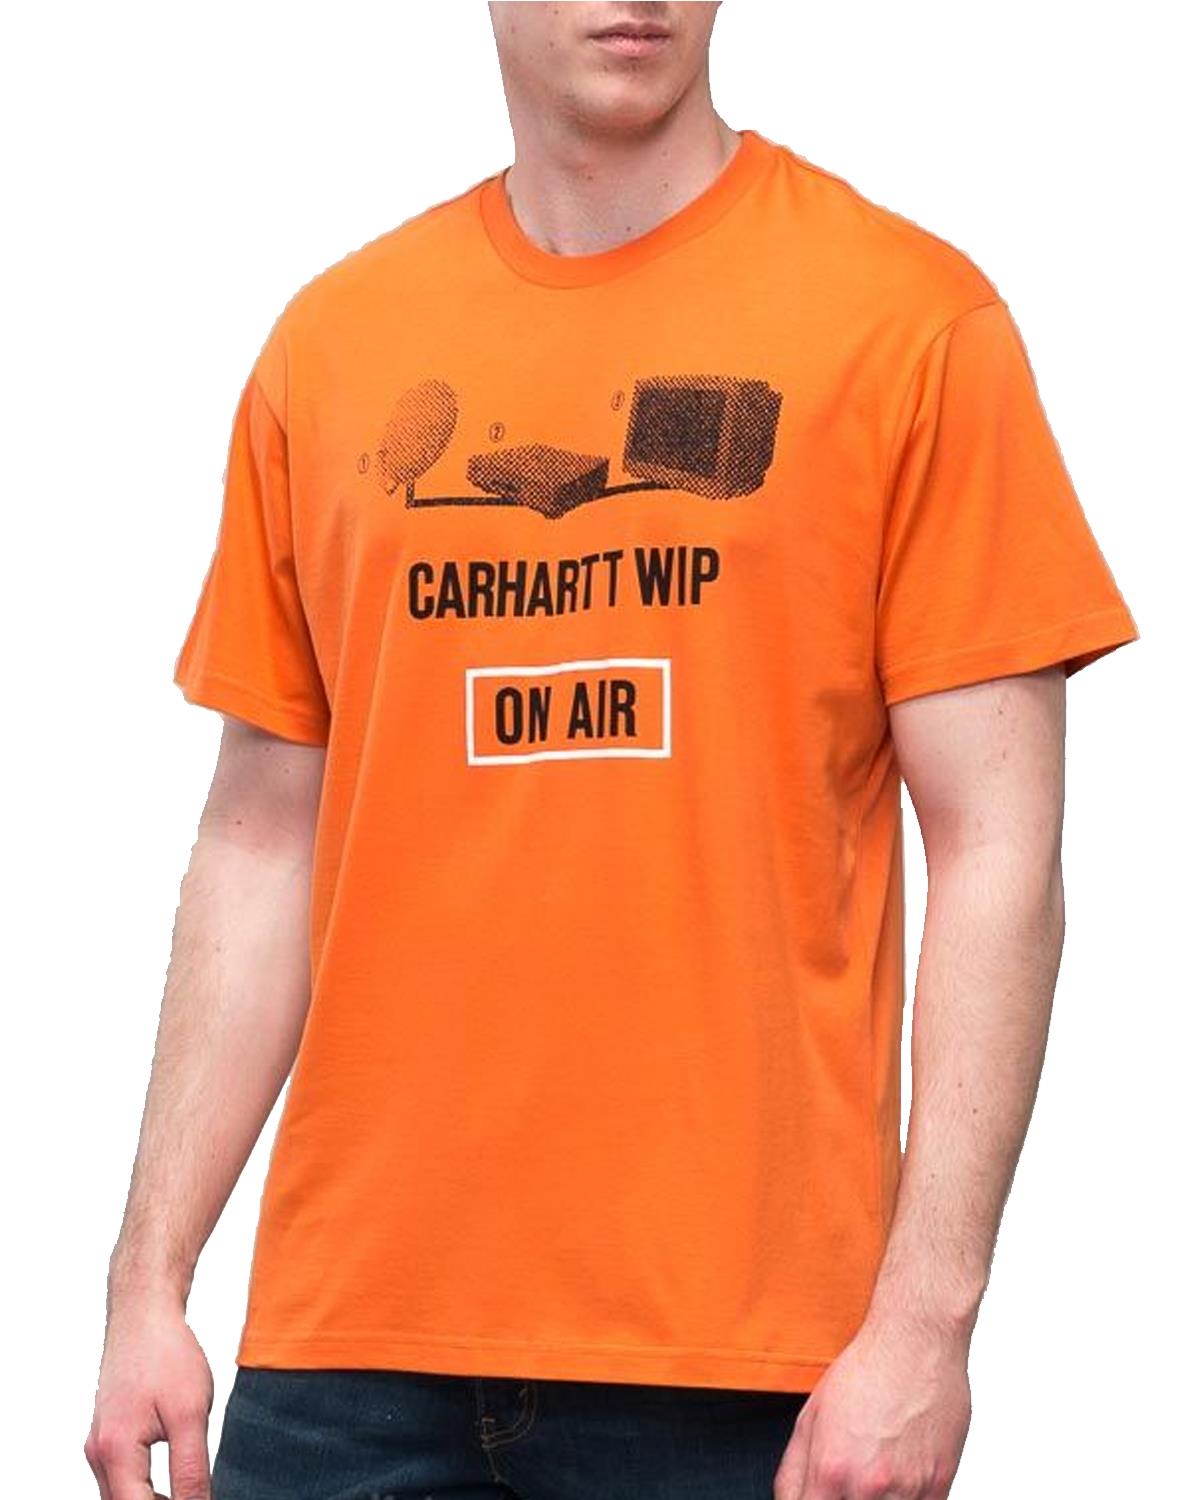 CARHARTT WIP T-SHIRT